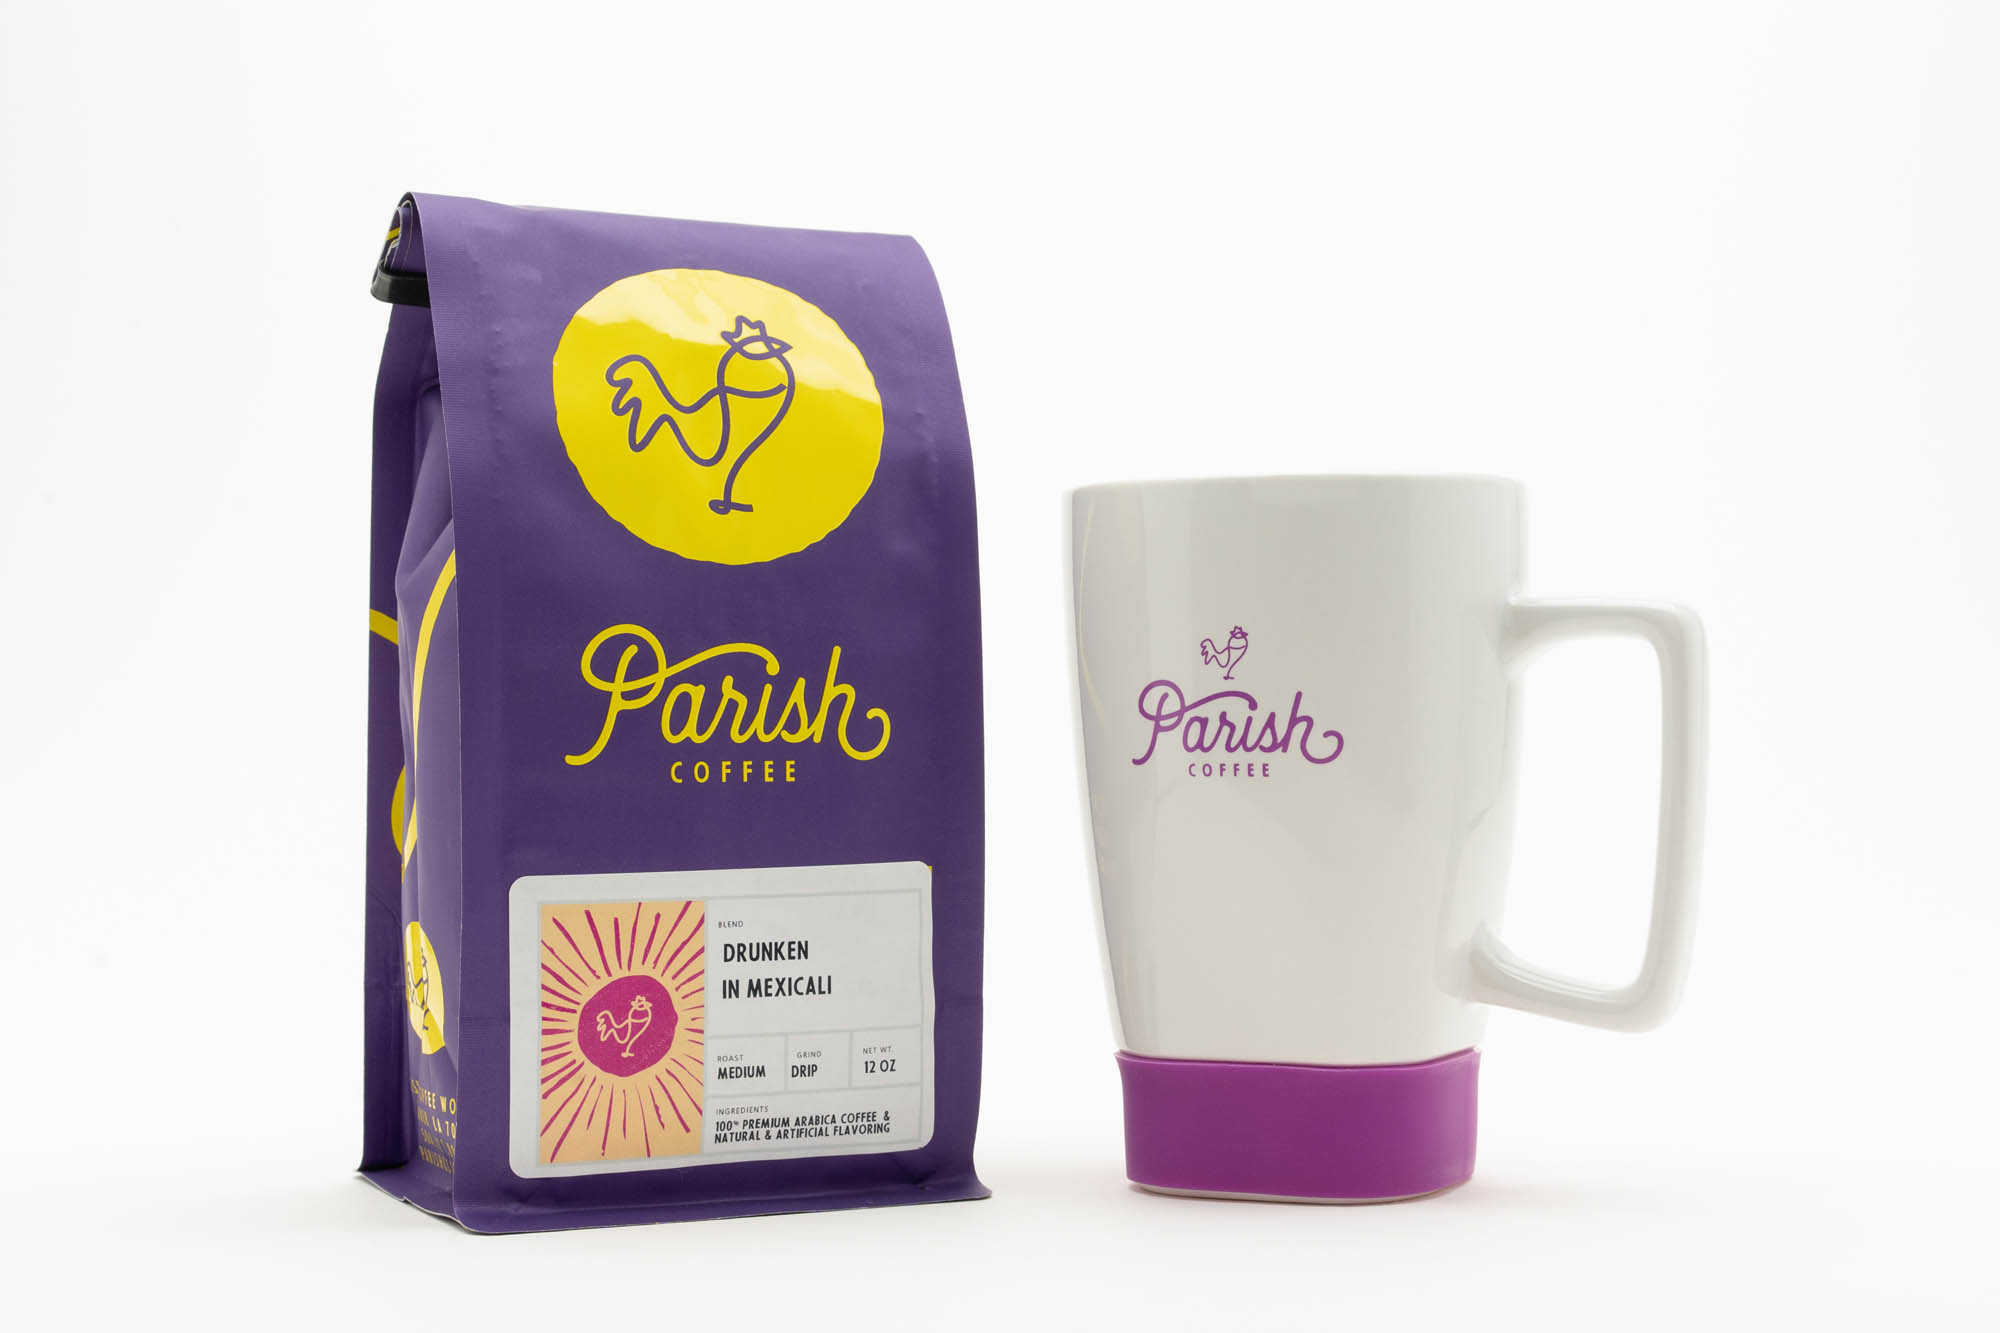 Parish Coffee bag and Parish coffee cup product photo